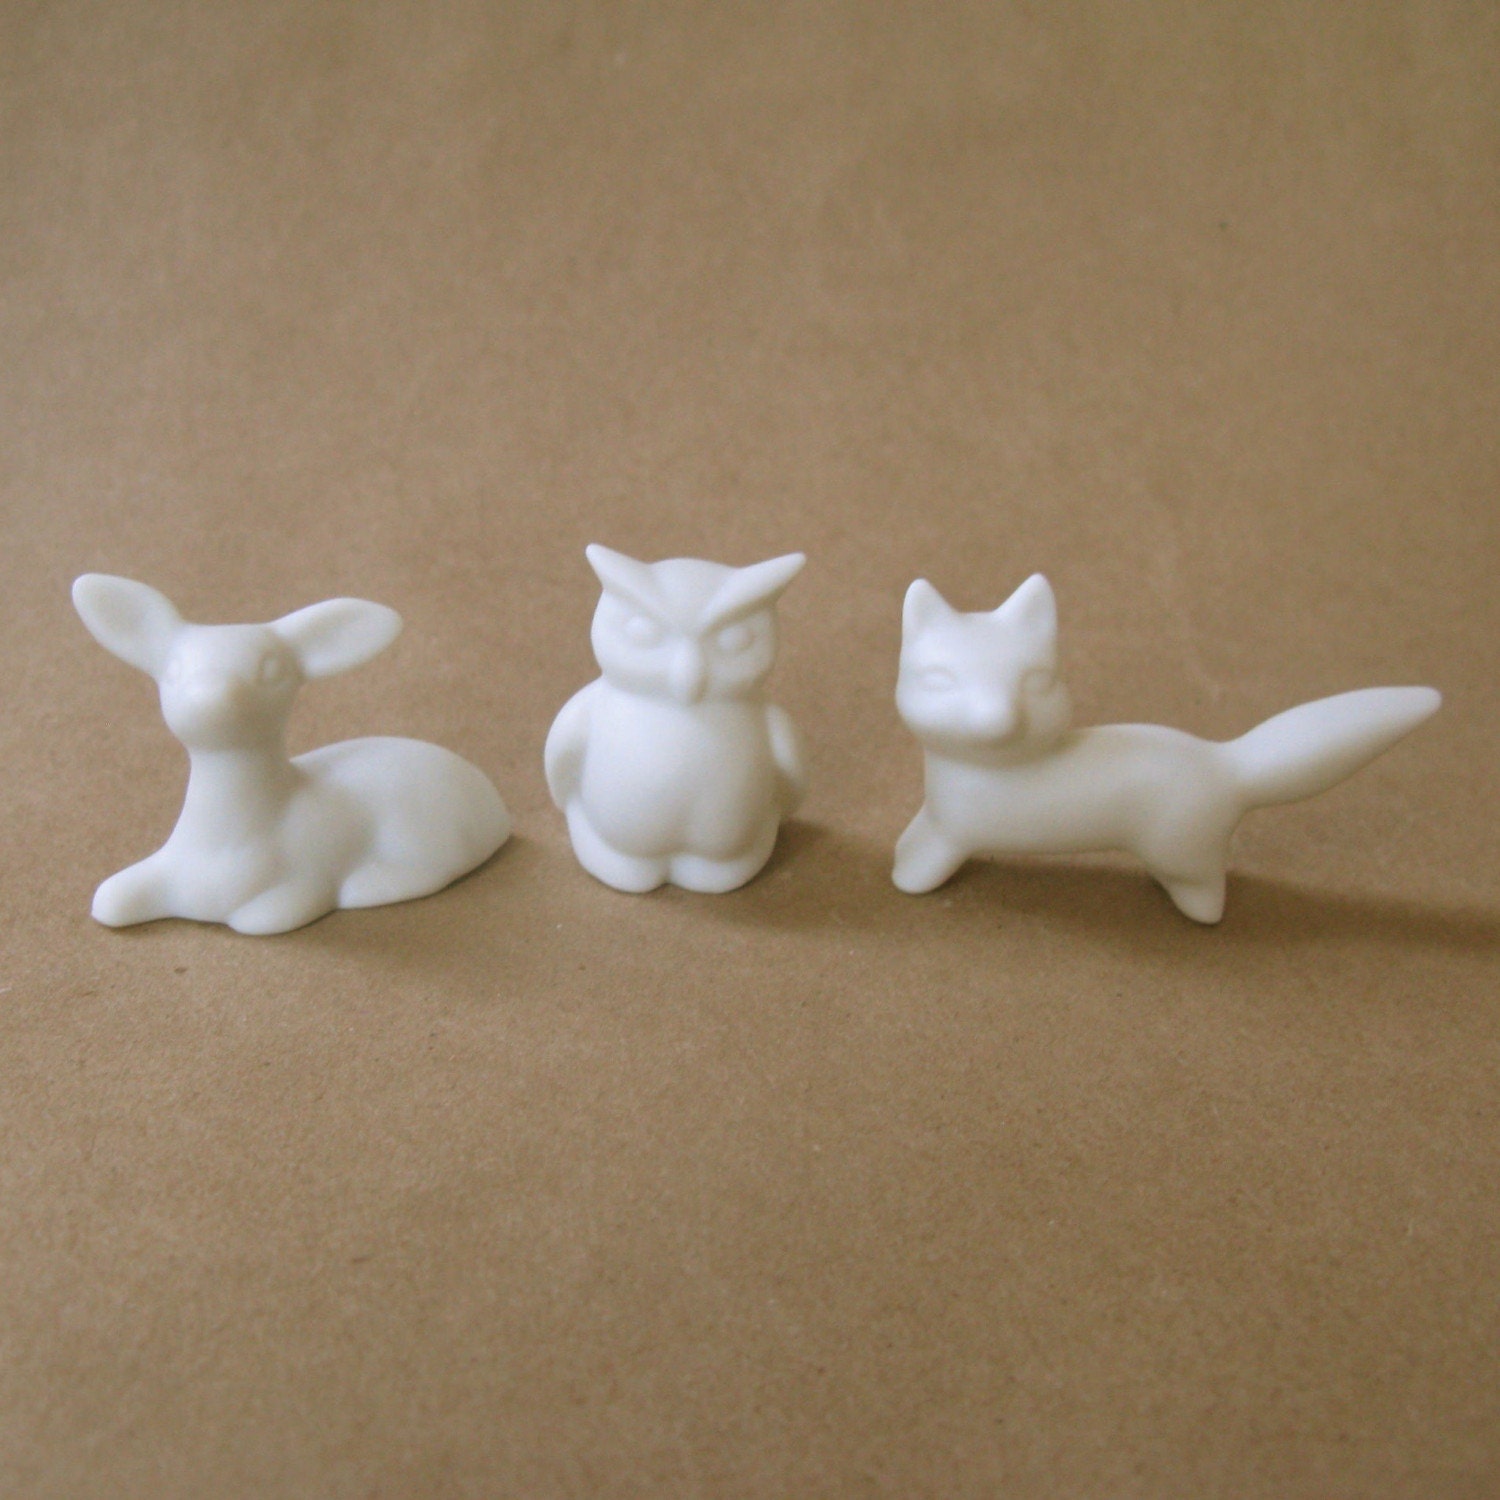 3 Miniature Forest Animals